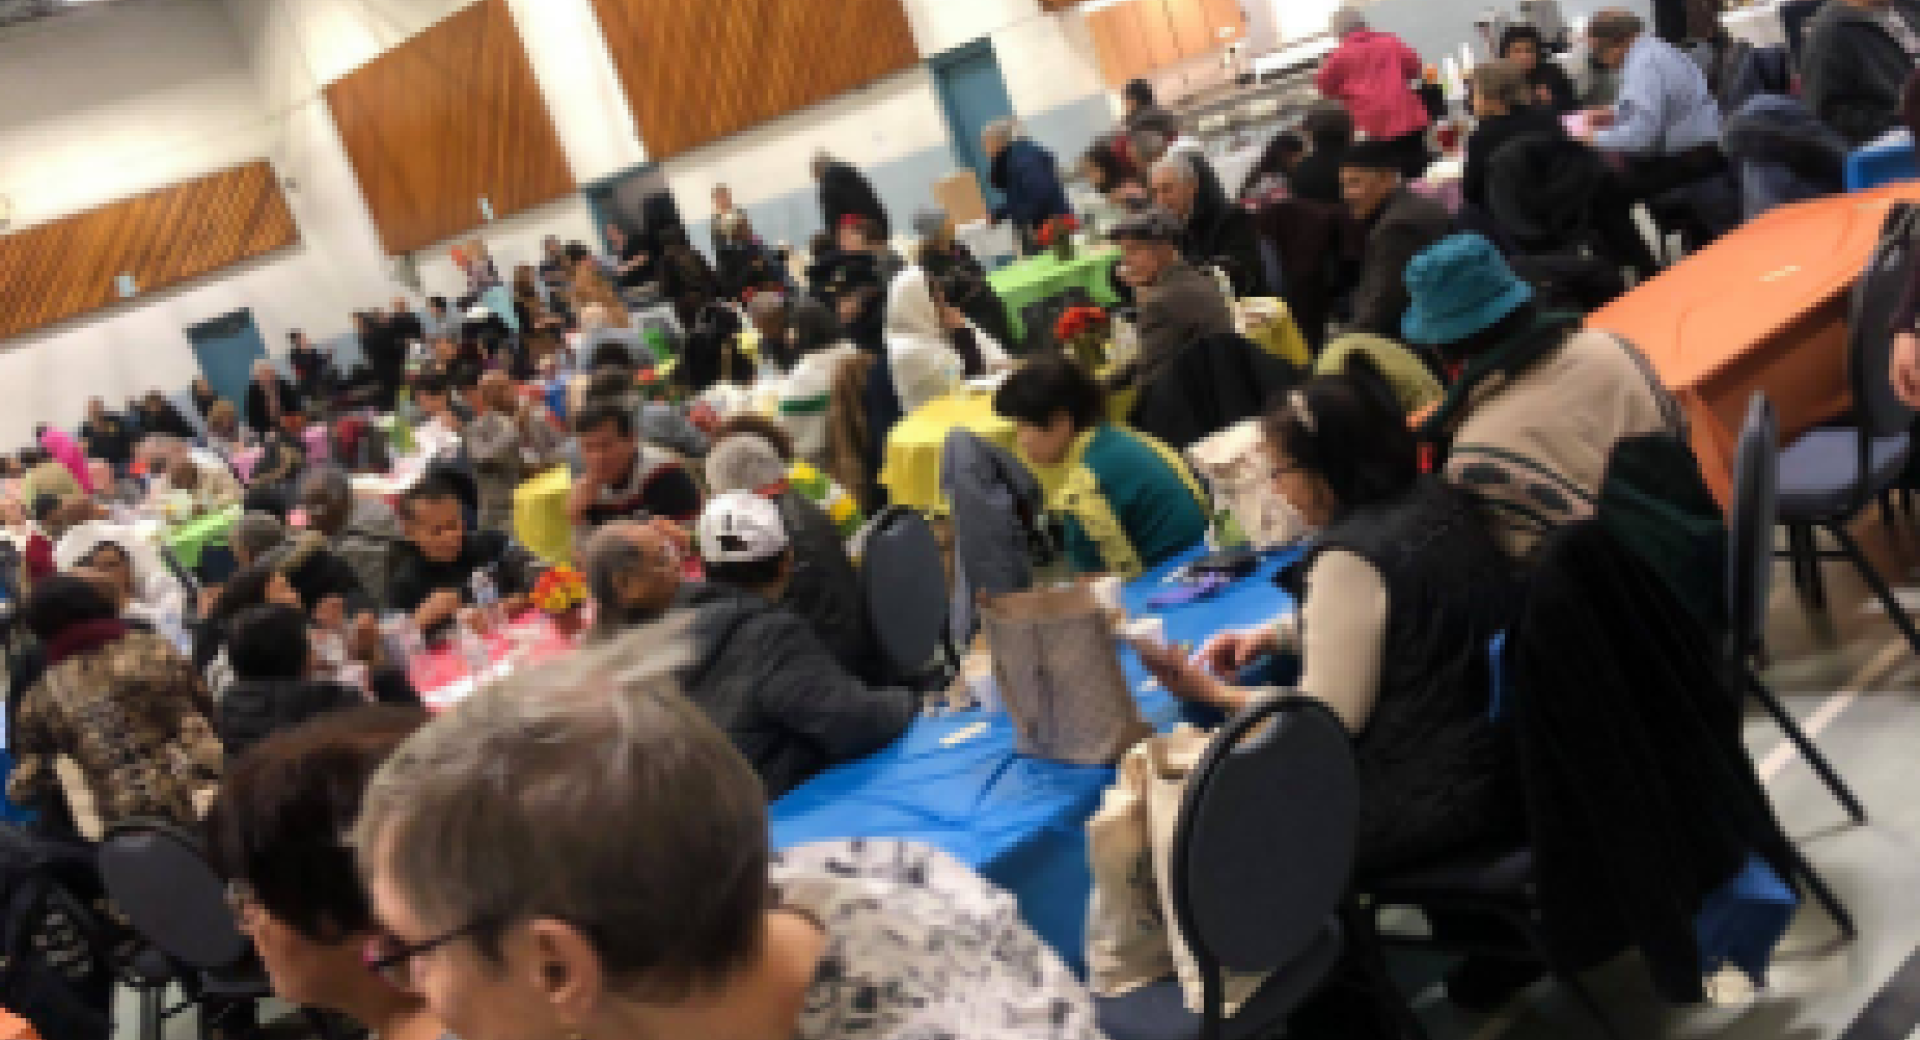 Seniors event at the Calgary Marlborough Community Association